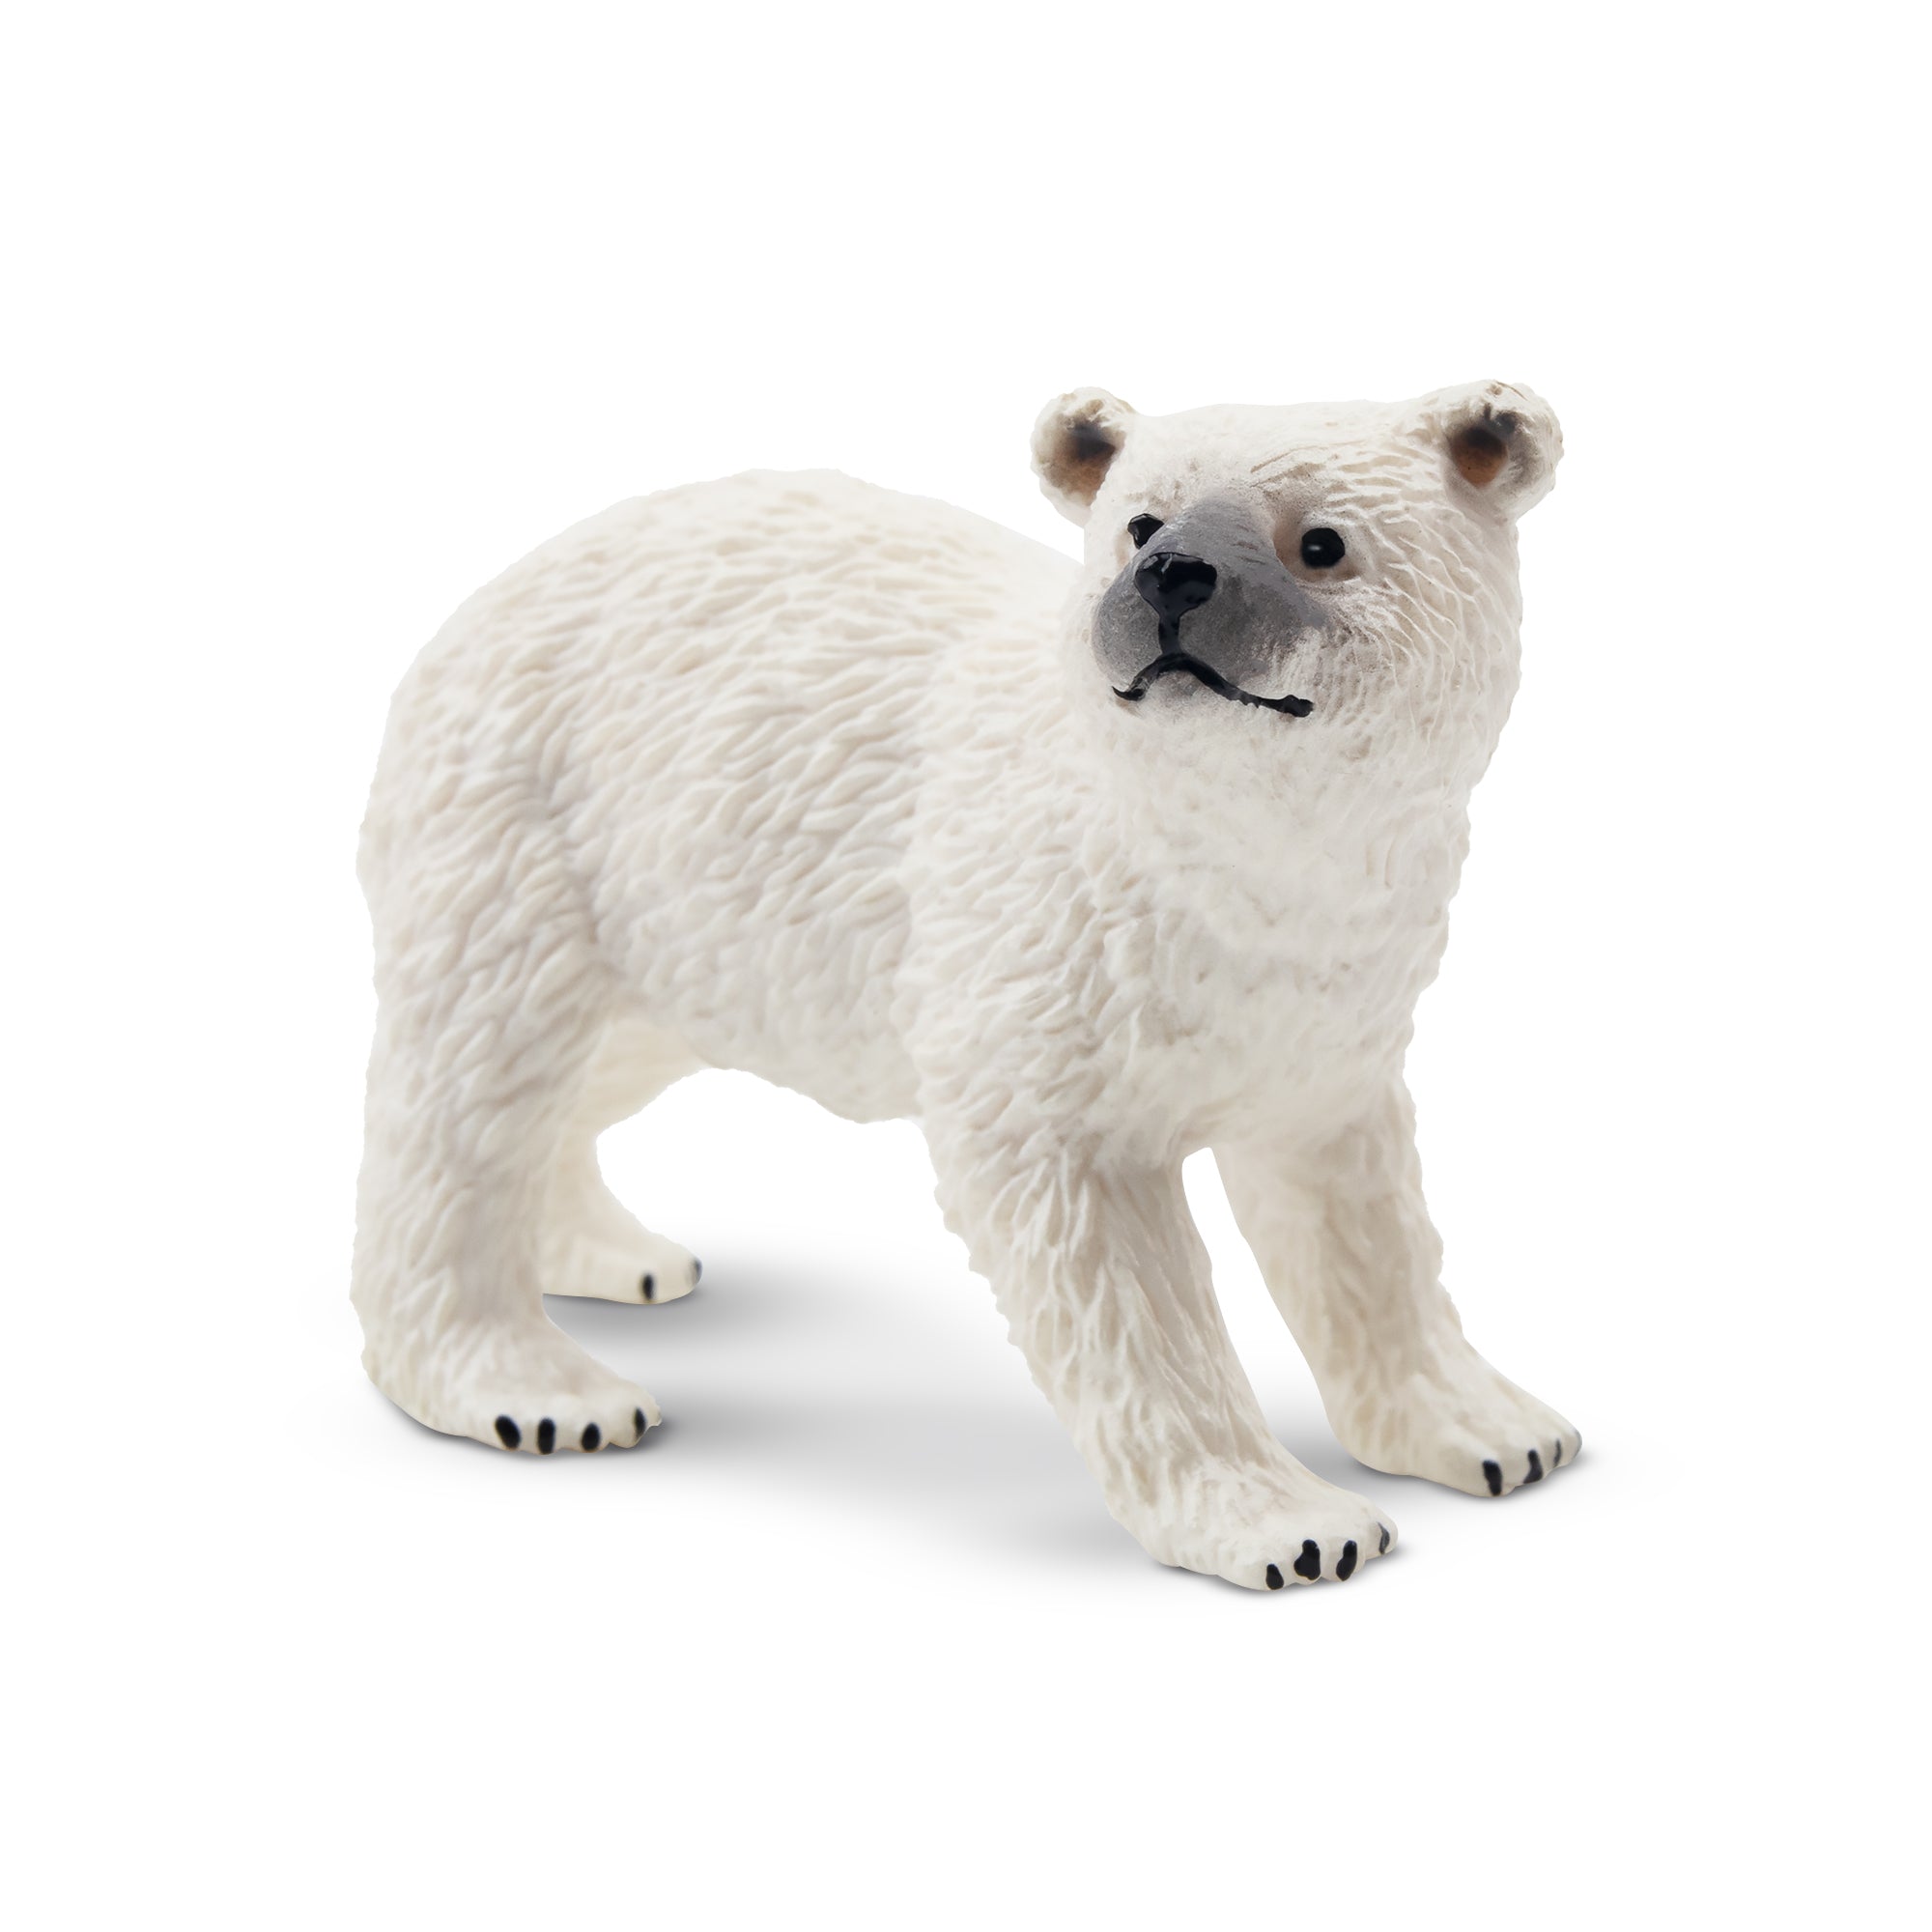 Toymany Standing Polar Bear Cub with Head Raised Figurine